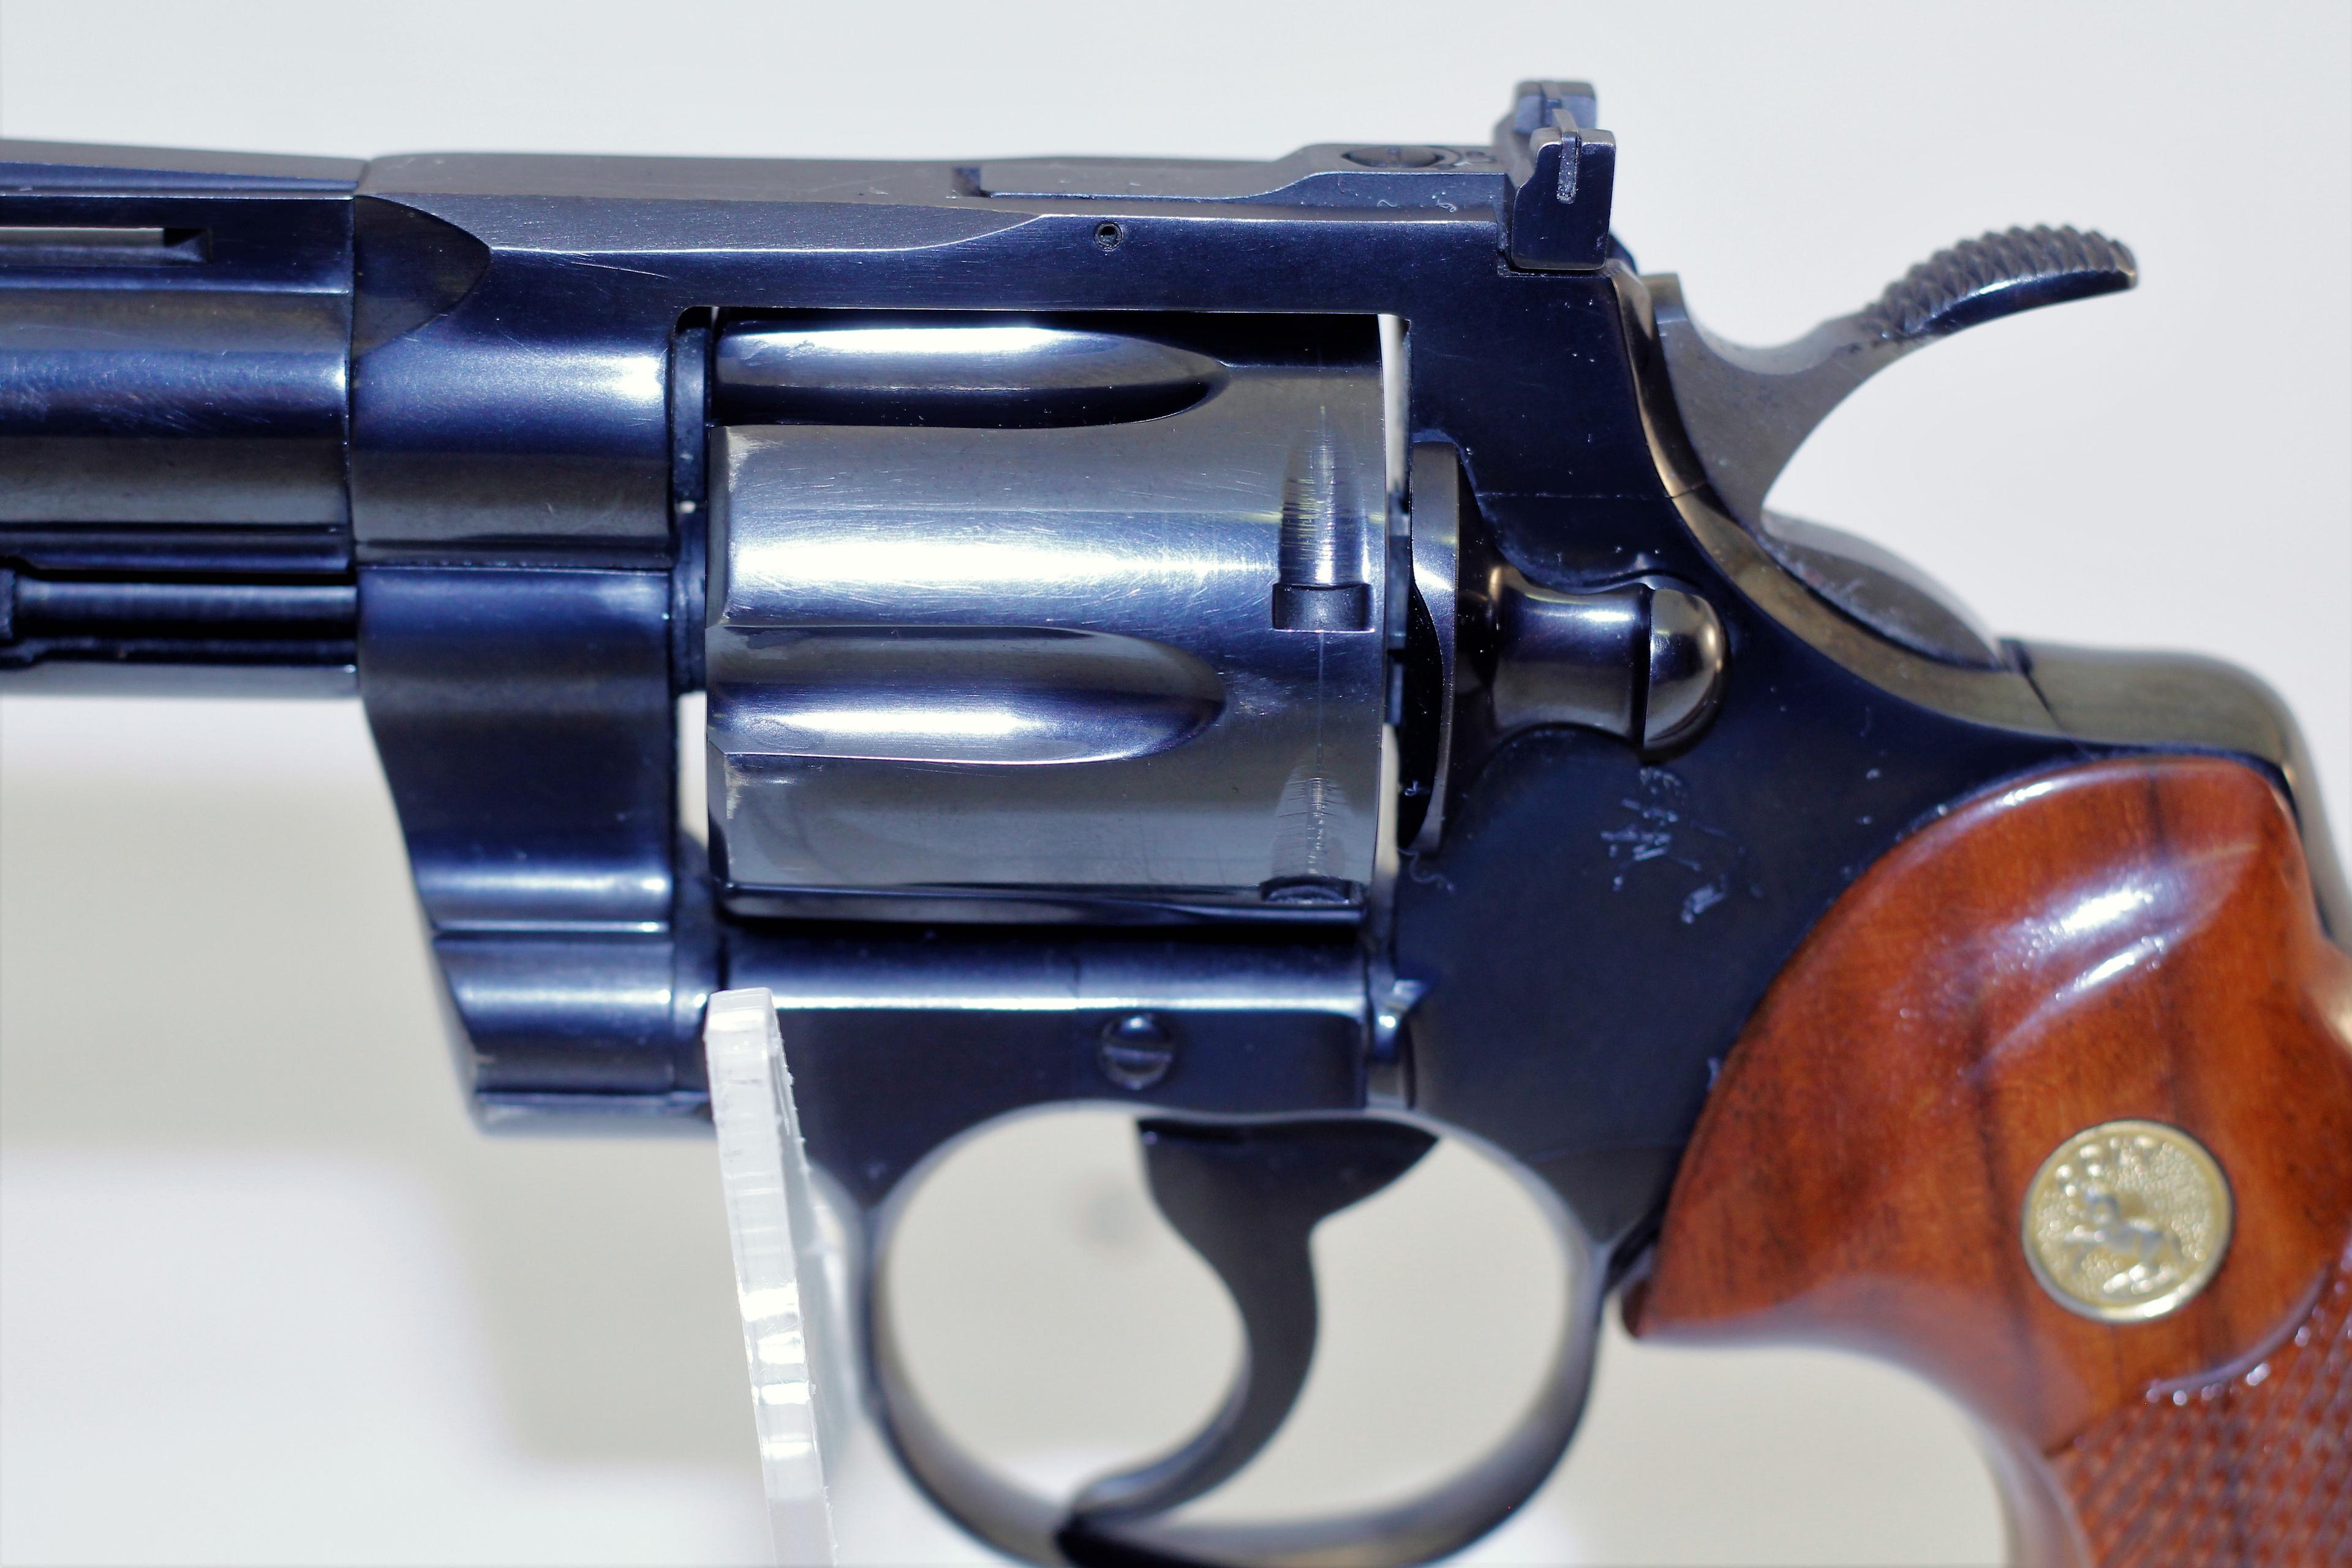 Colt model Python 357 mag double action revolver